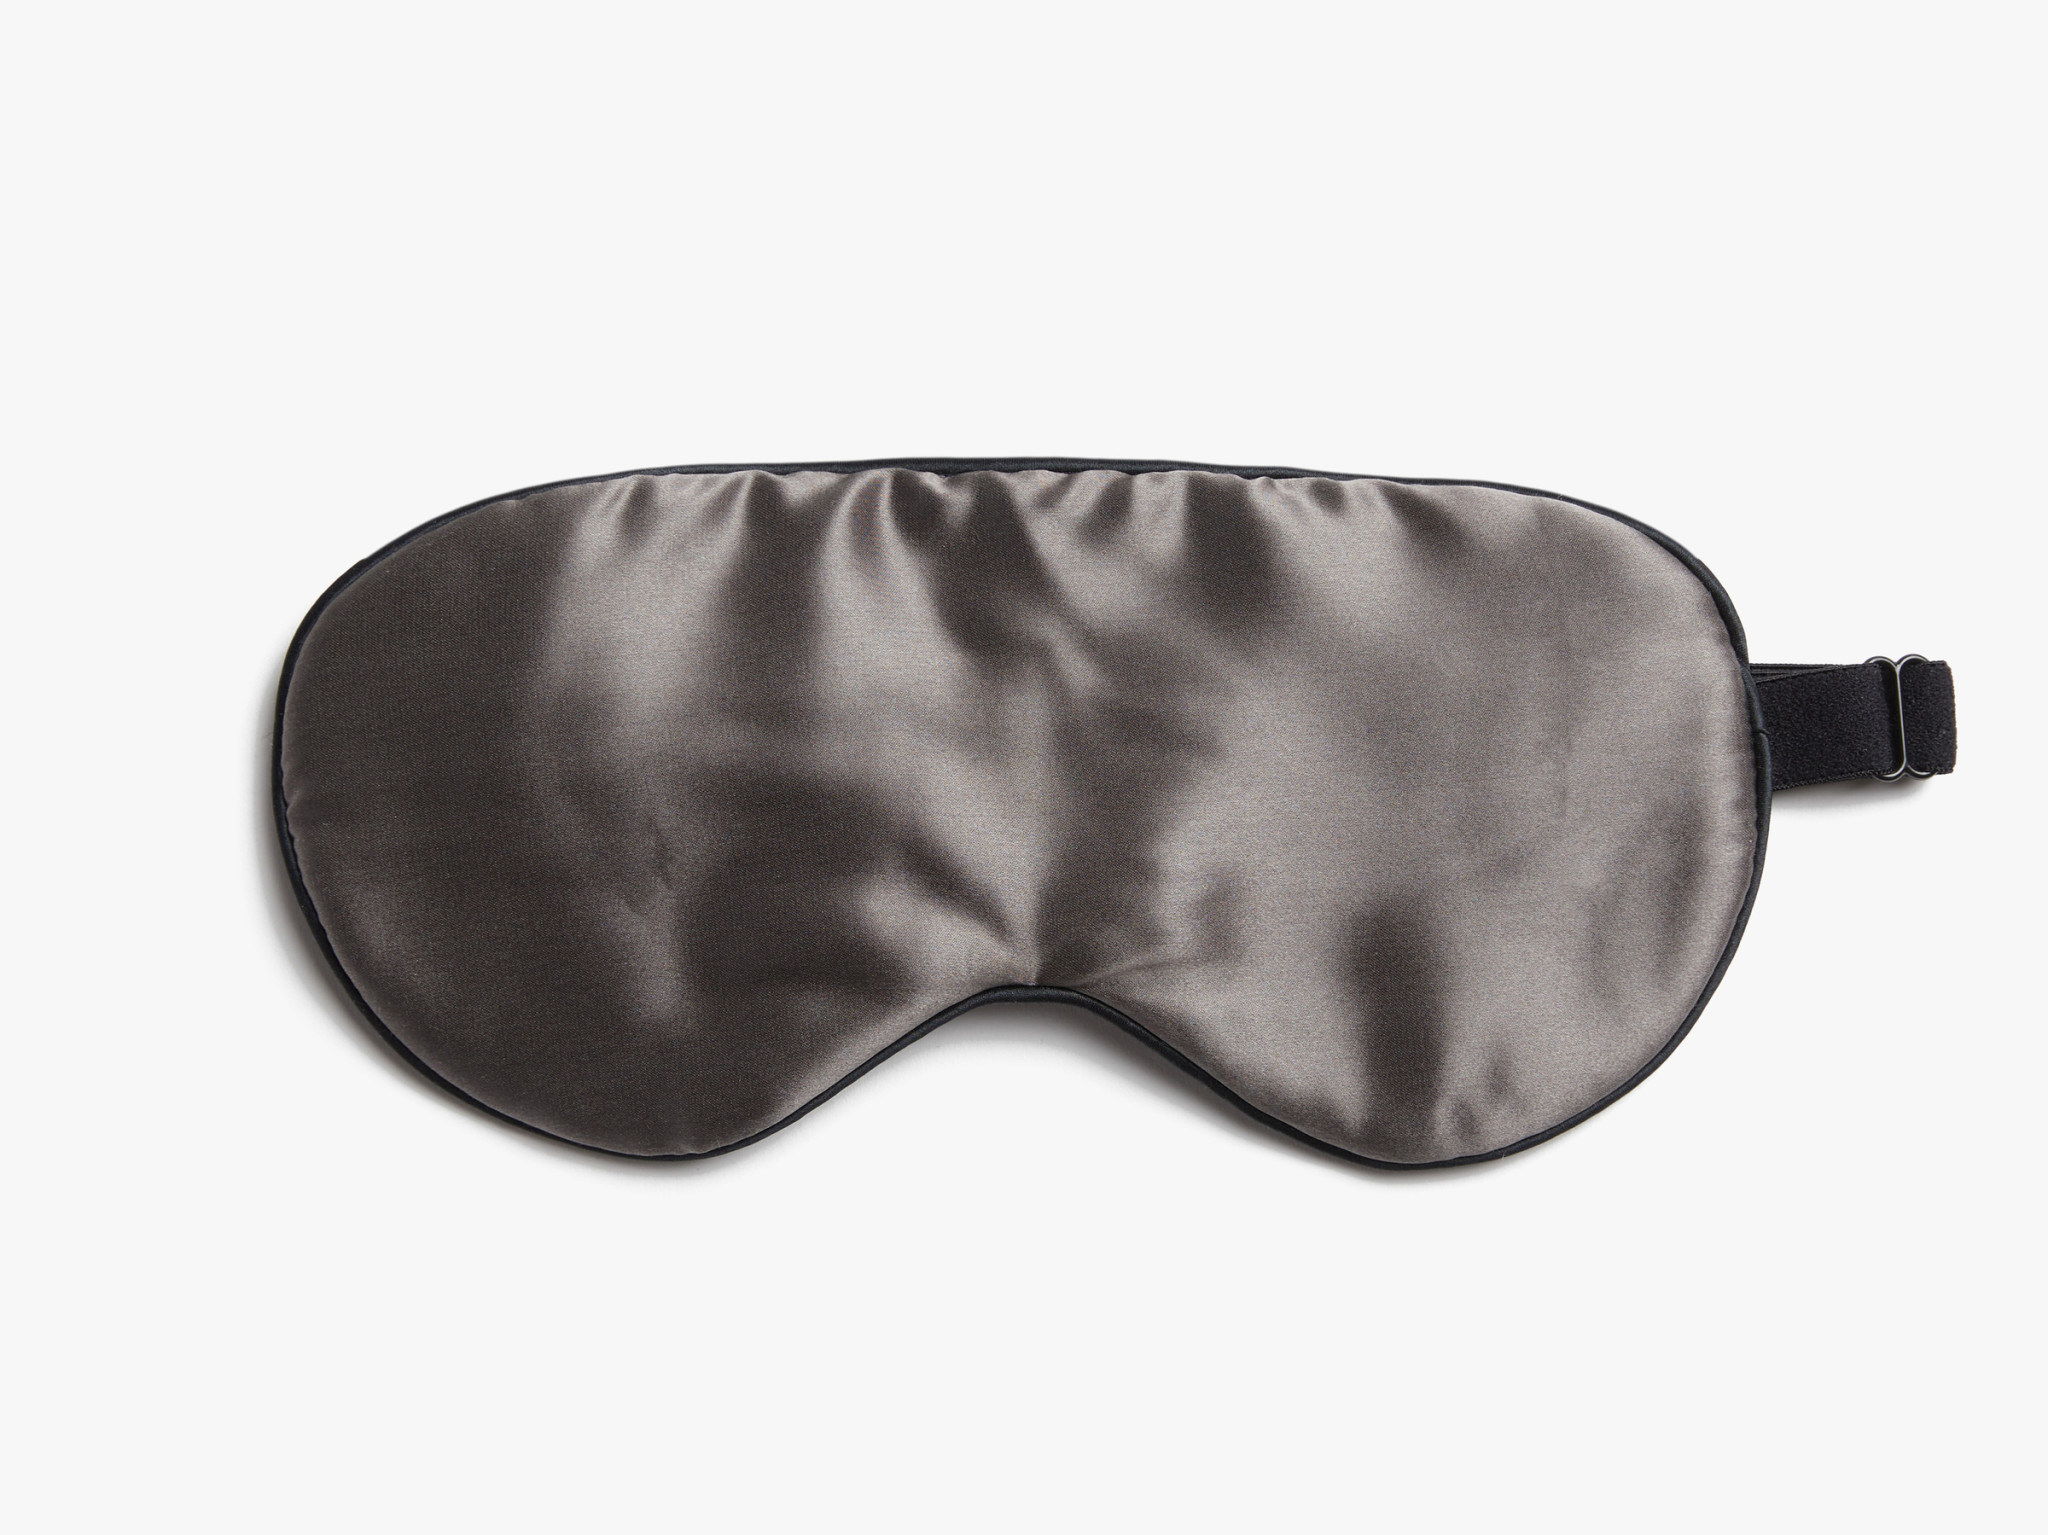 Lumanuby Soft Sleeping Mask Blindfold Light Blocking Eye Shield Blinder Comfortable For Deep Sleep Relaxation 